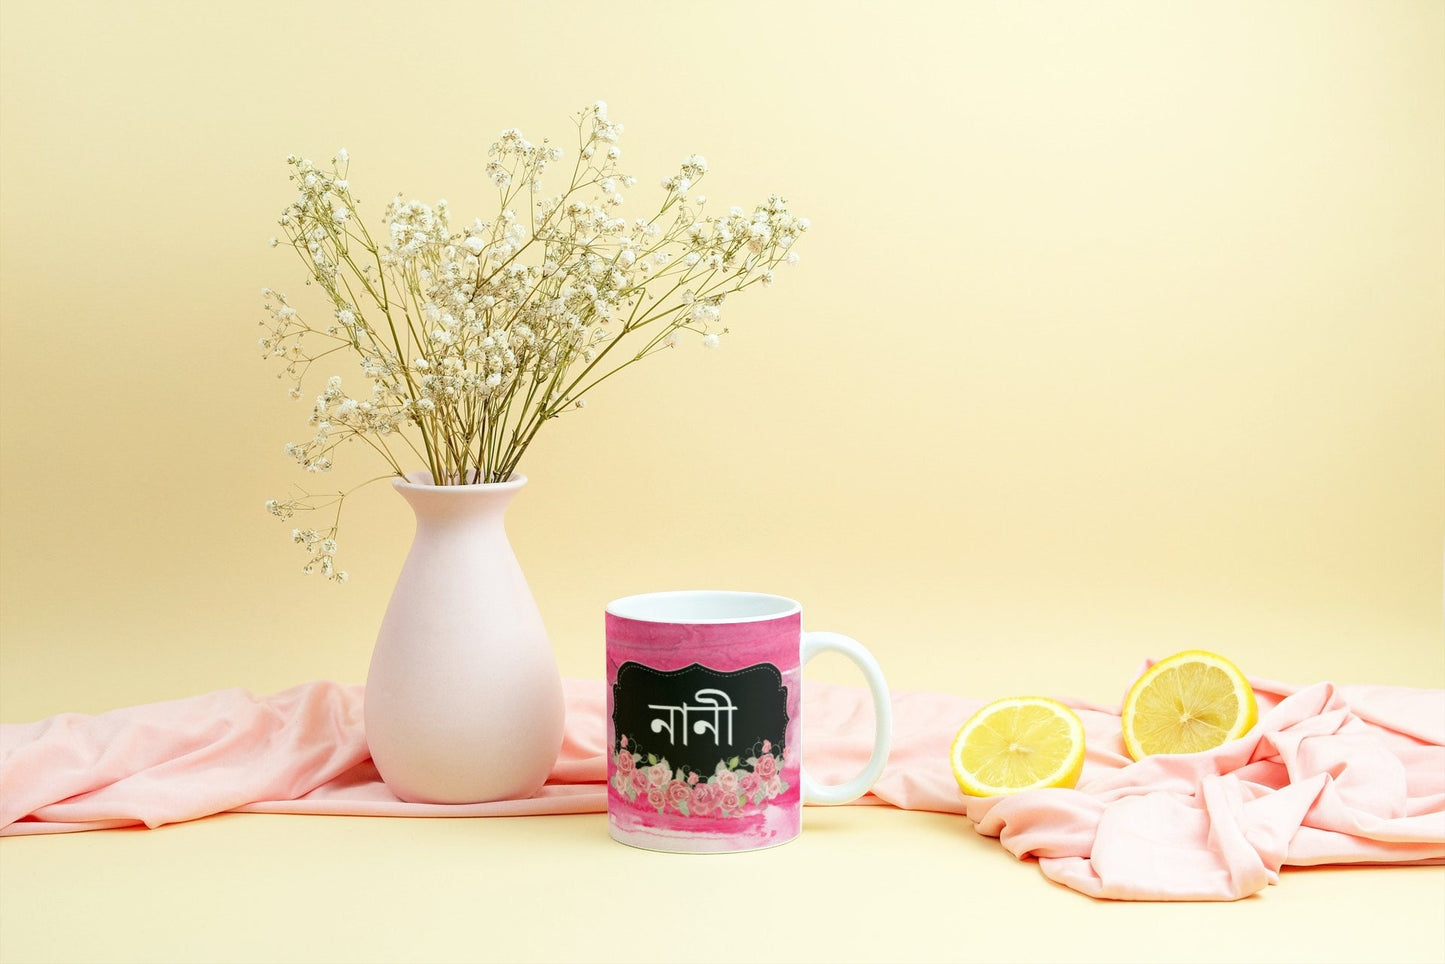 Nani Mug Bangla, Bangla, Muslim Mug, Eid Mug, Personalised Mug, Arabic Mug, Muslimah Mug, Arabian Mug, Ramadan Mug, Coffee Tea Mug